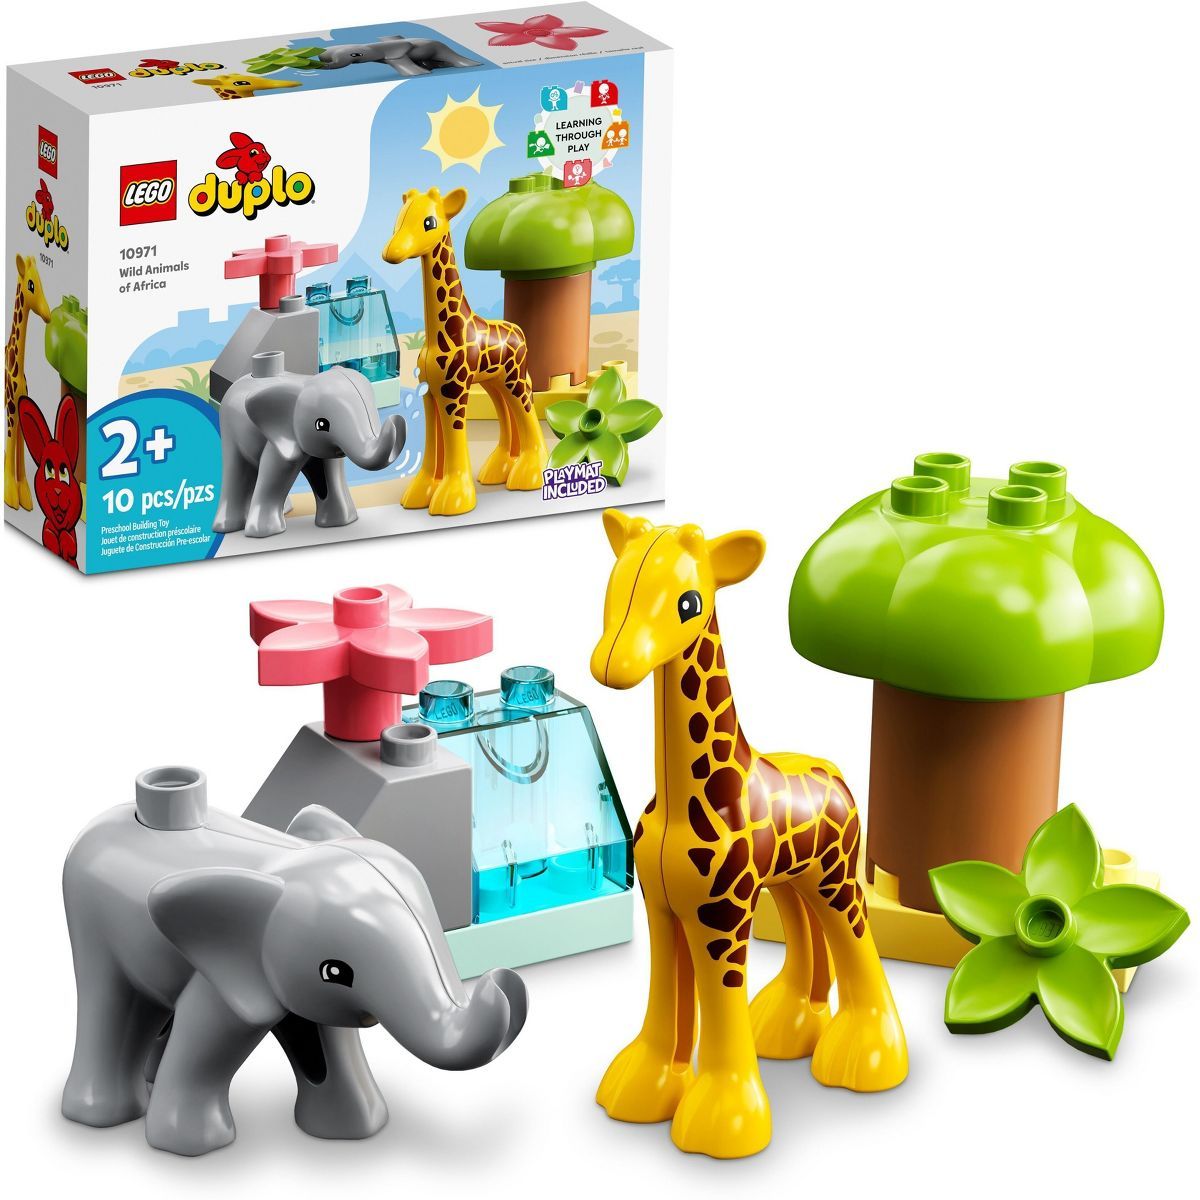 LEGO DUPLO Wild Animals of Africa Toy 10971 | Target